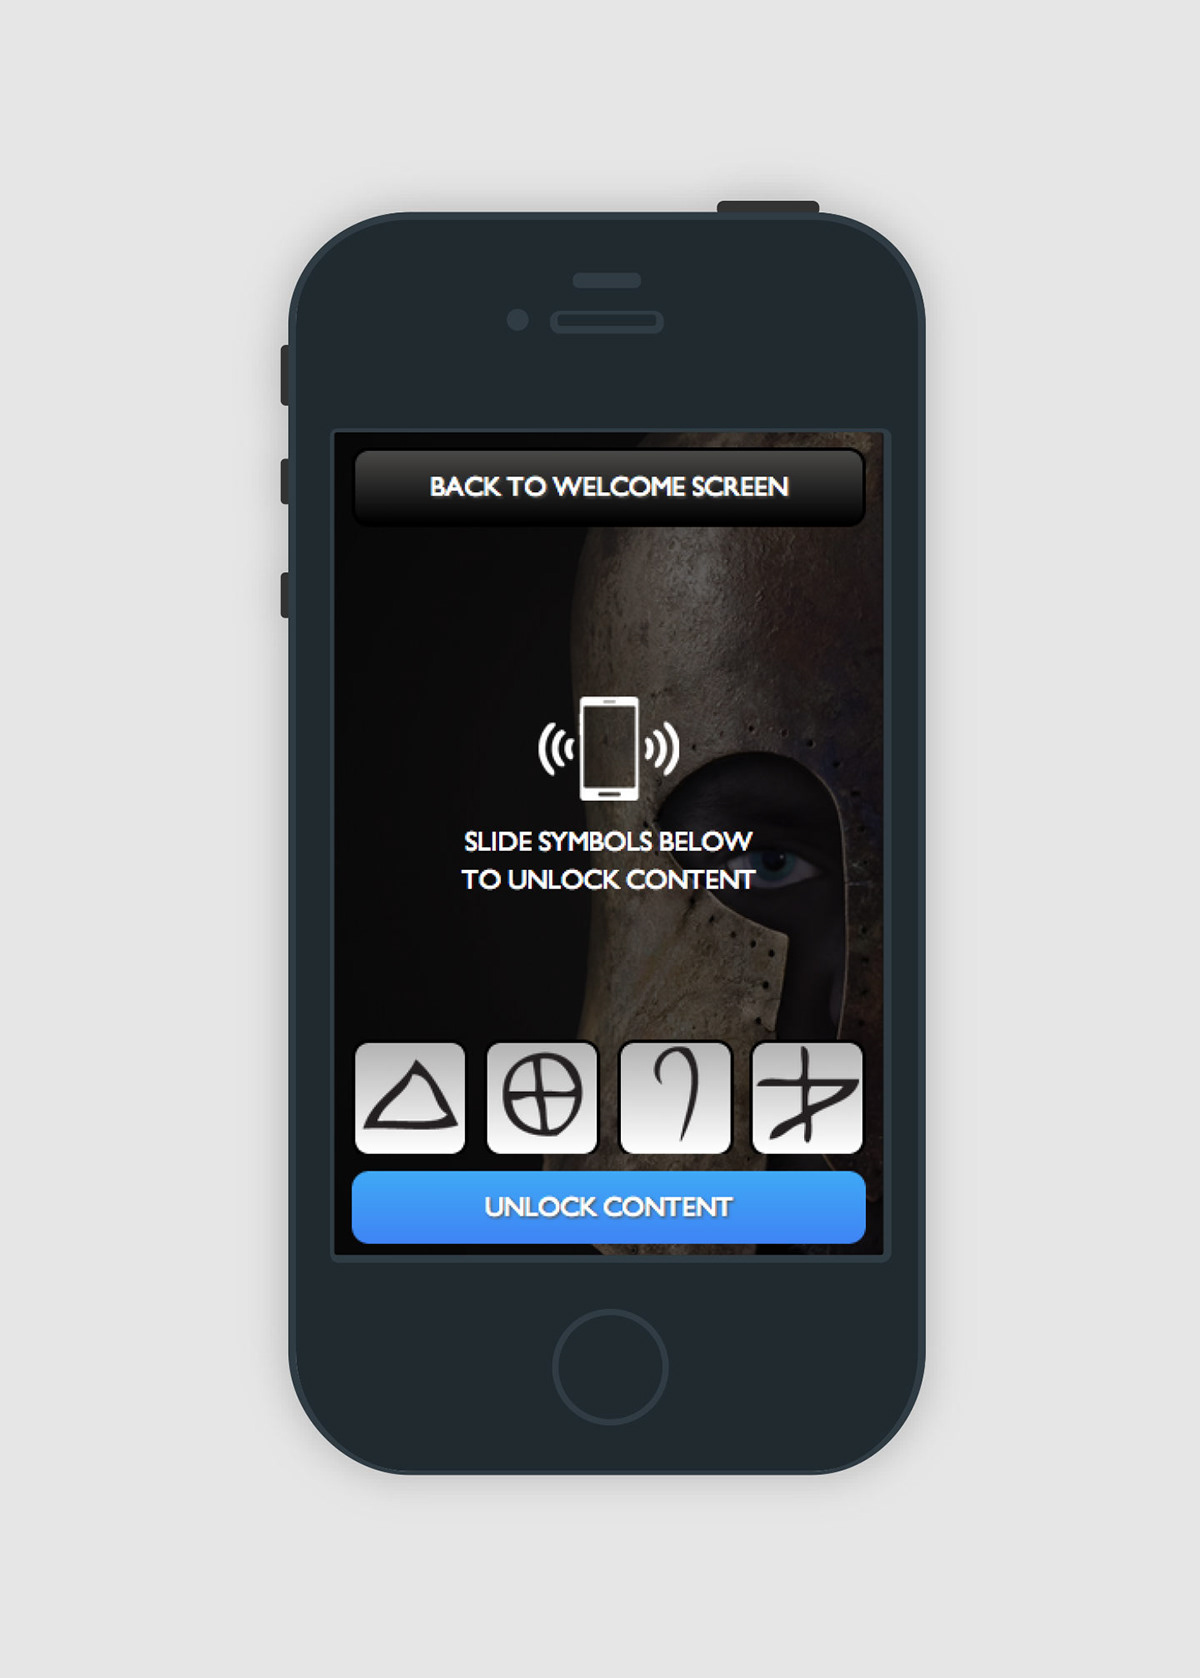 Ancient worlds museum manchester egypt Rome Exhibition  iPad iphone mobile app Web design UI ux